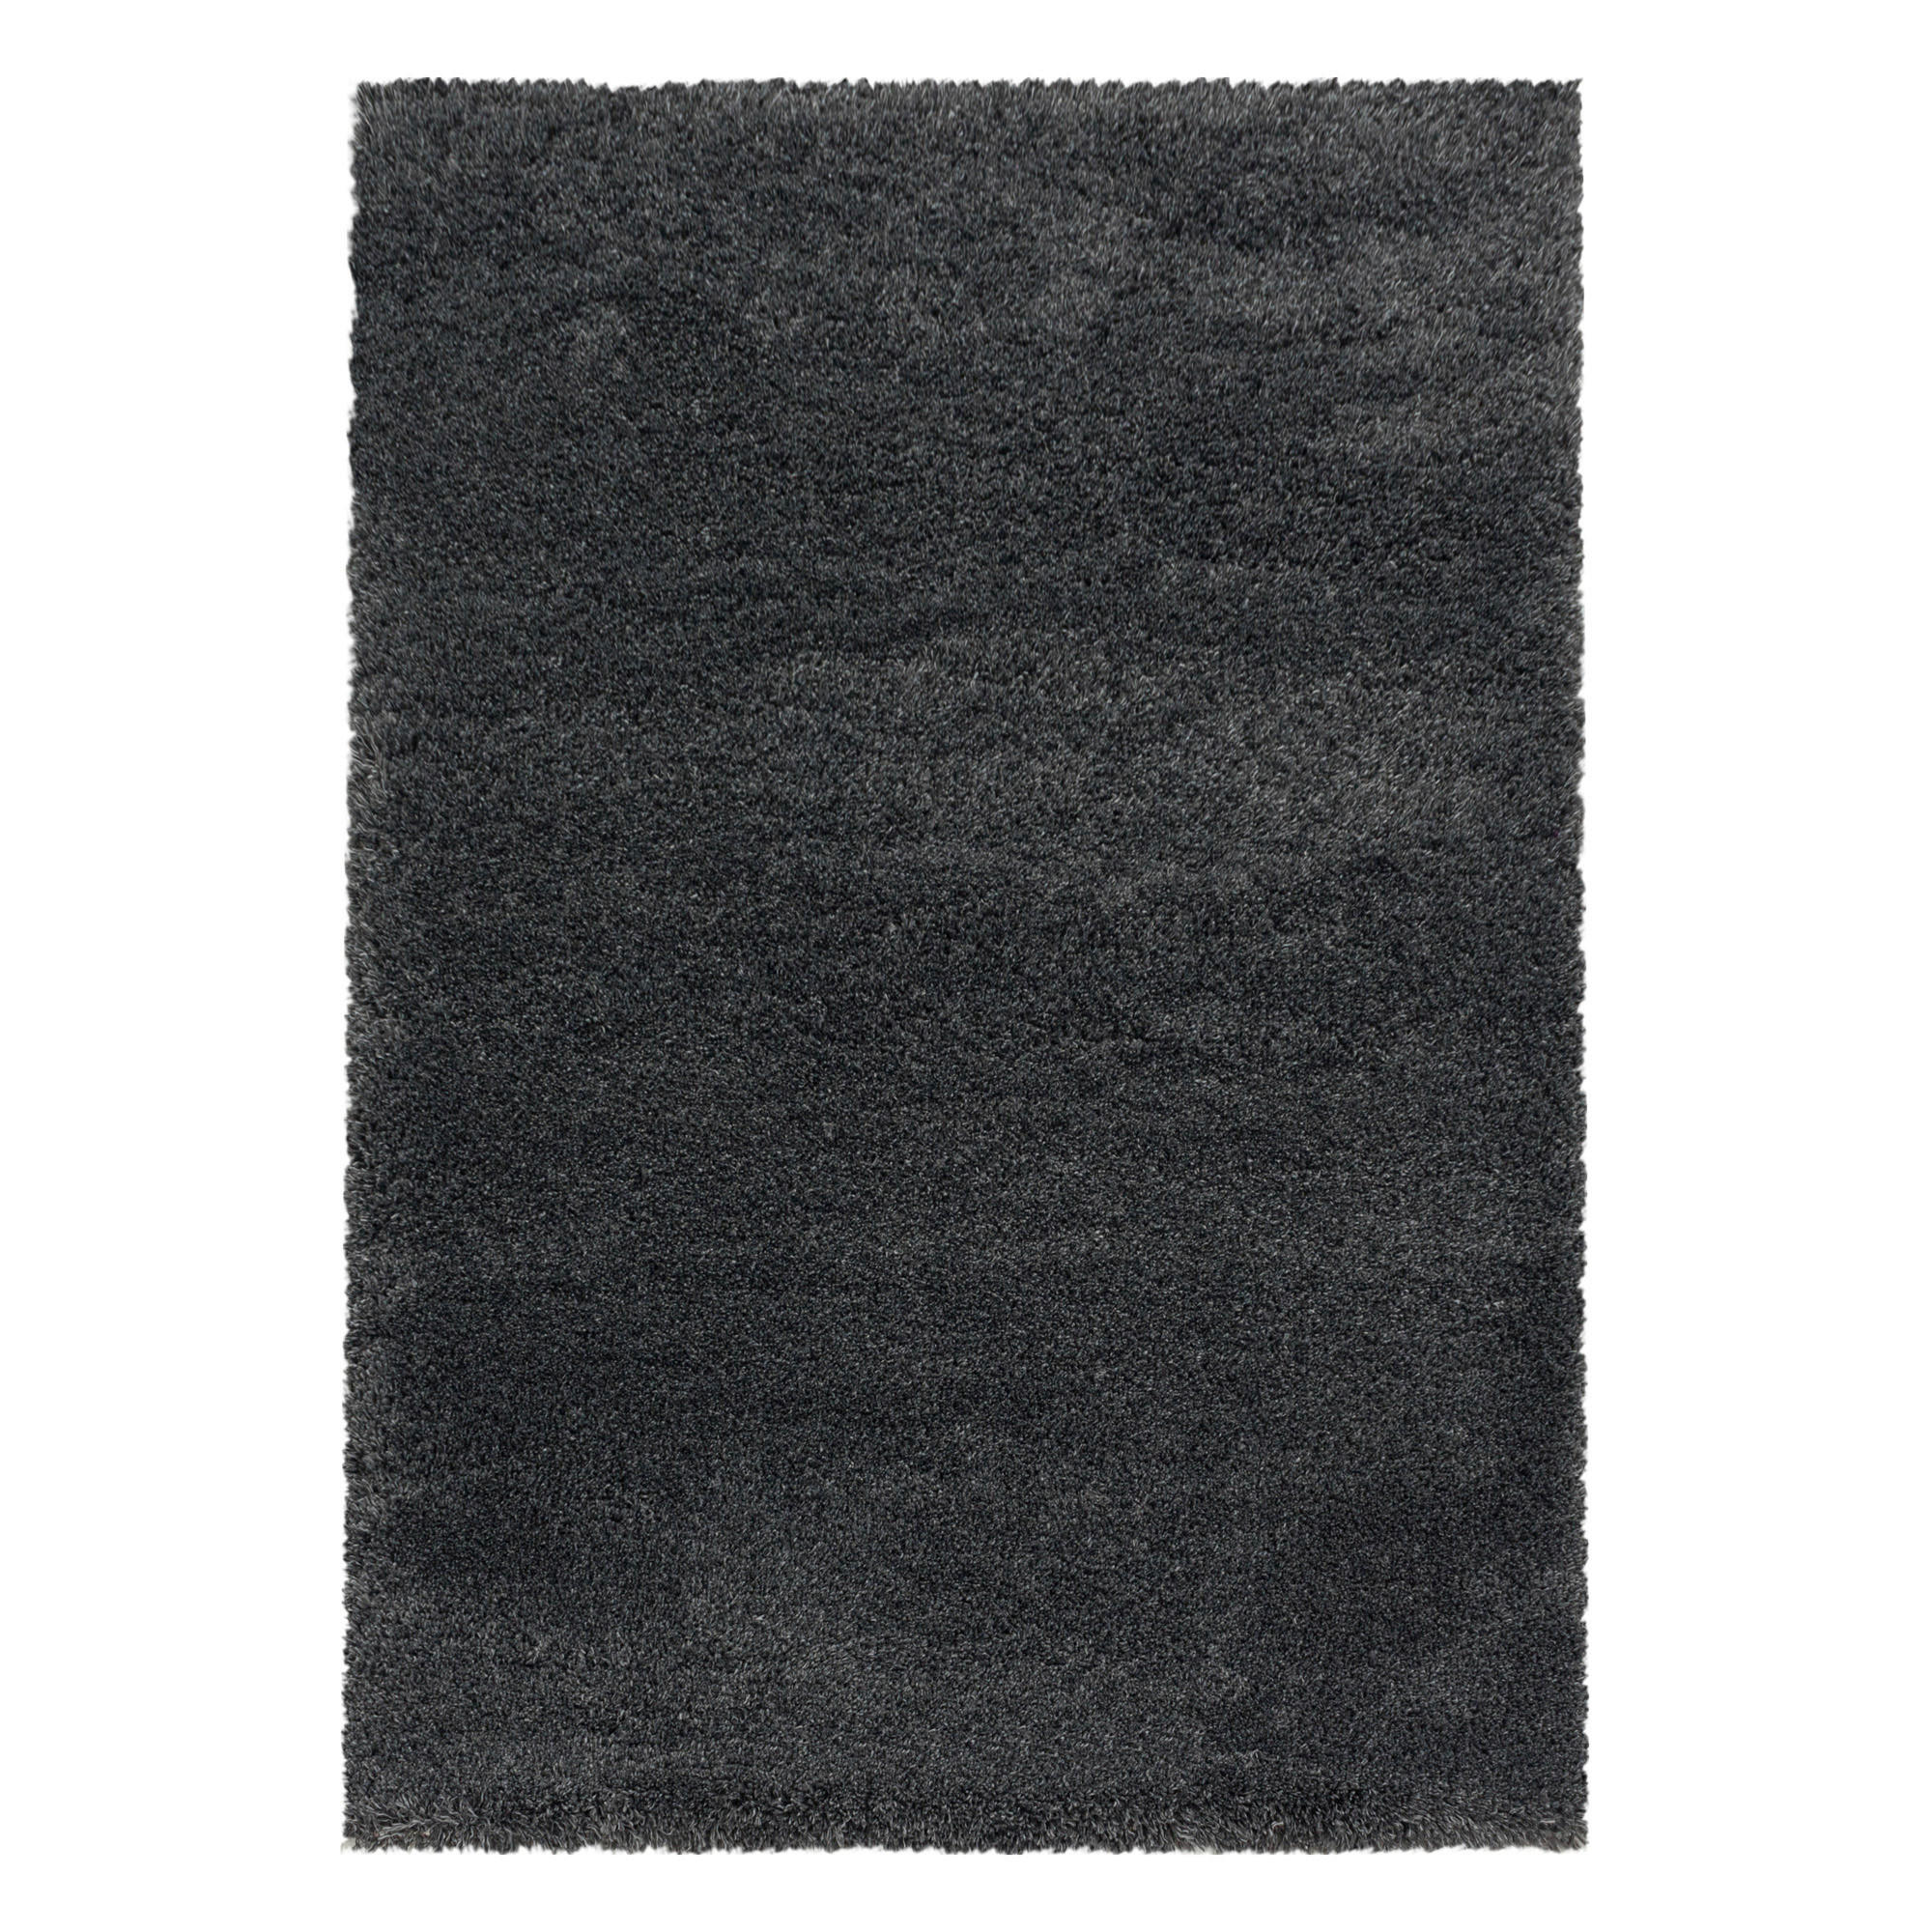 HOCHFLORTEPPICH  60/110 cm  gewebt  Grau   - Grau, Basics, Textil (60/110cm) - Novel